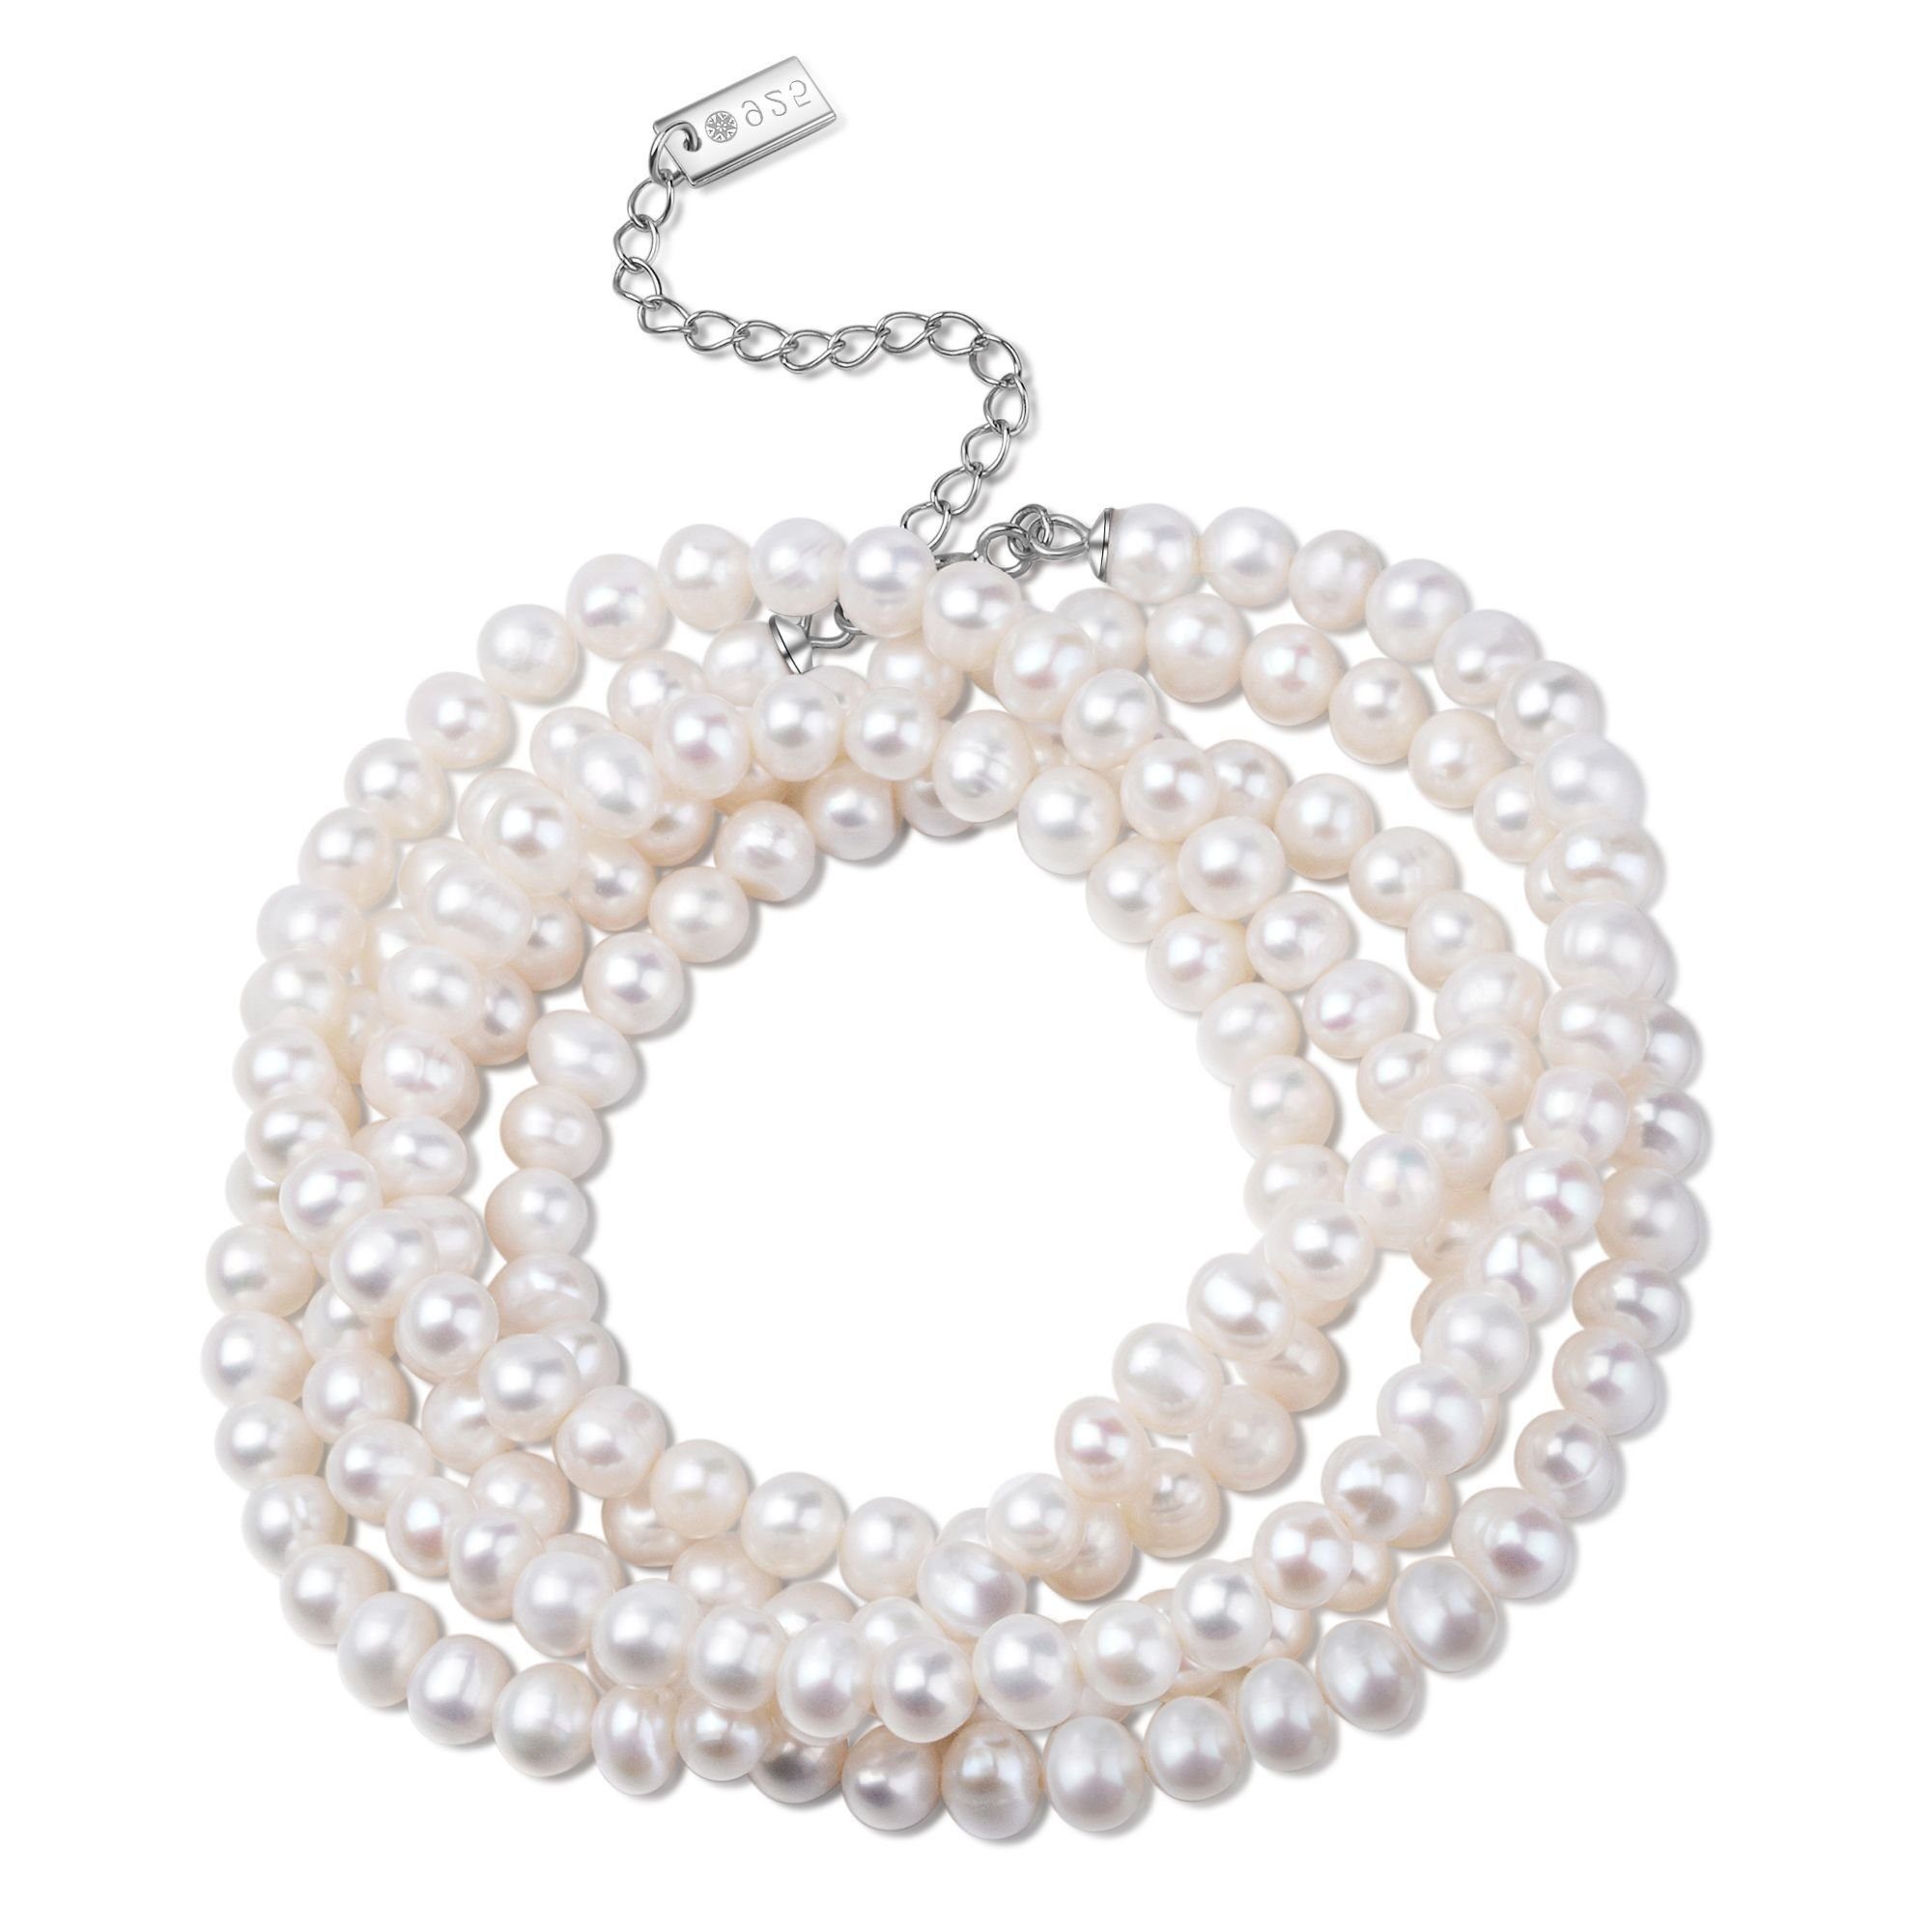 AILORIA Armband MOE armband-halskette silber/weiße perle, Armband-Halskette Silber/weiße Perle | Silberarmbänder